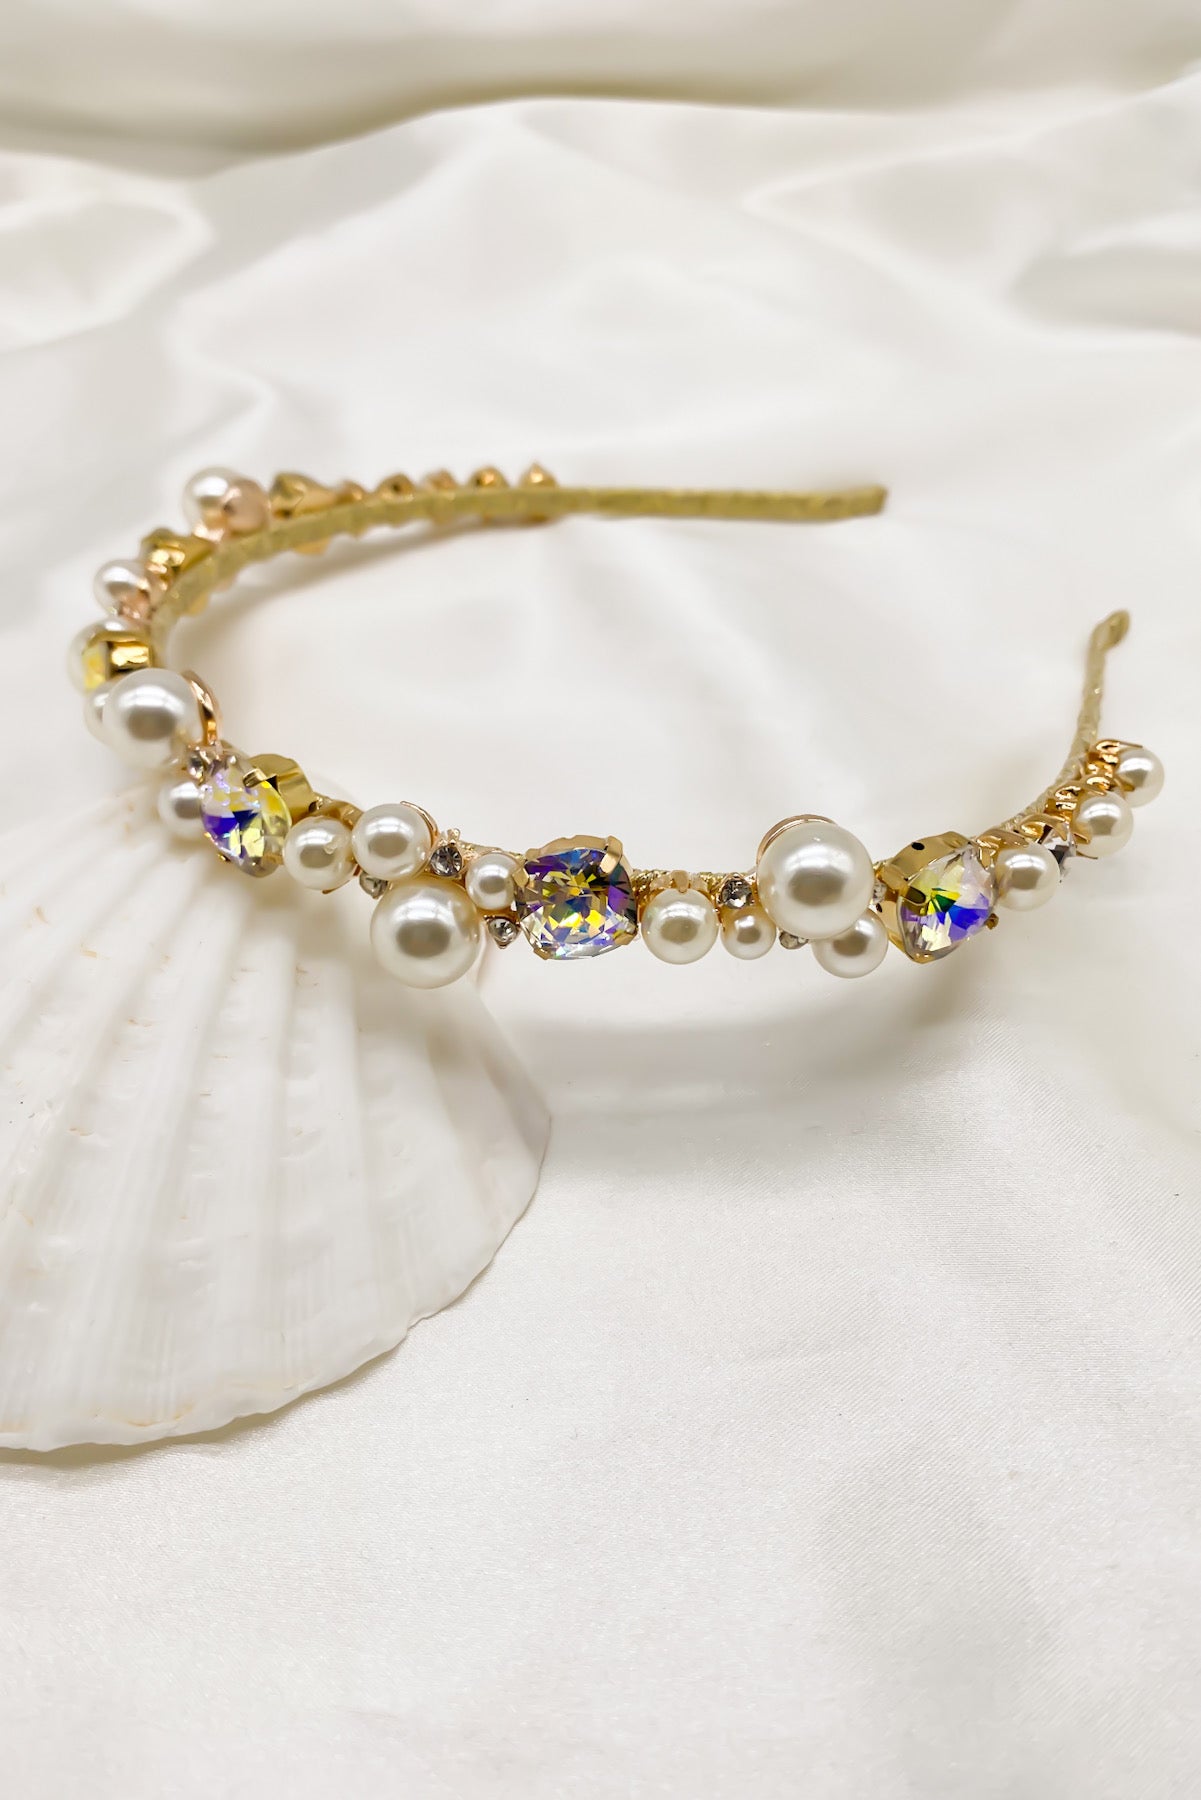 SKYE Shop Chic Modern Elegant Classy Women Jewelry French Parisian Minimalist Marcelle Pearl Crystal Gold Headband 6